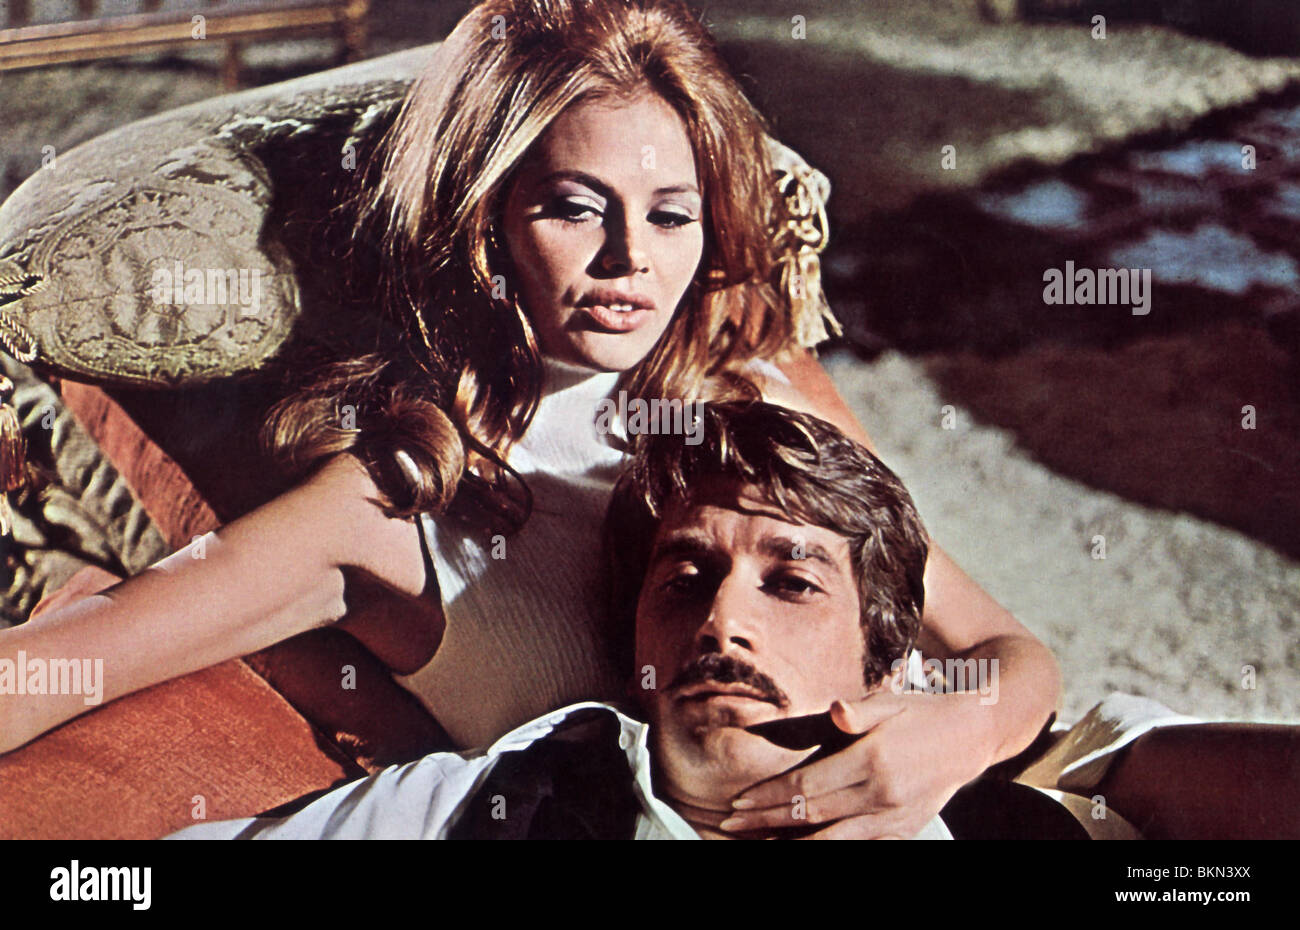 STILETTO (1969) BRITT EKLAND, ALEX CORD, BERNARD KOWALSKI (DIR) STIL 008FOH Stockfoto